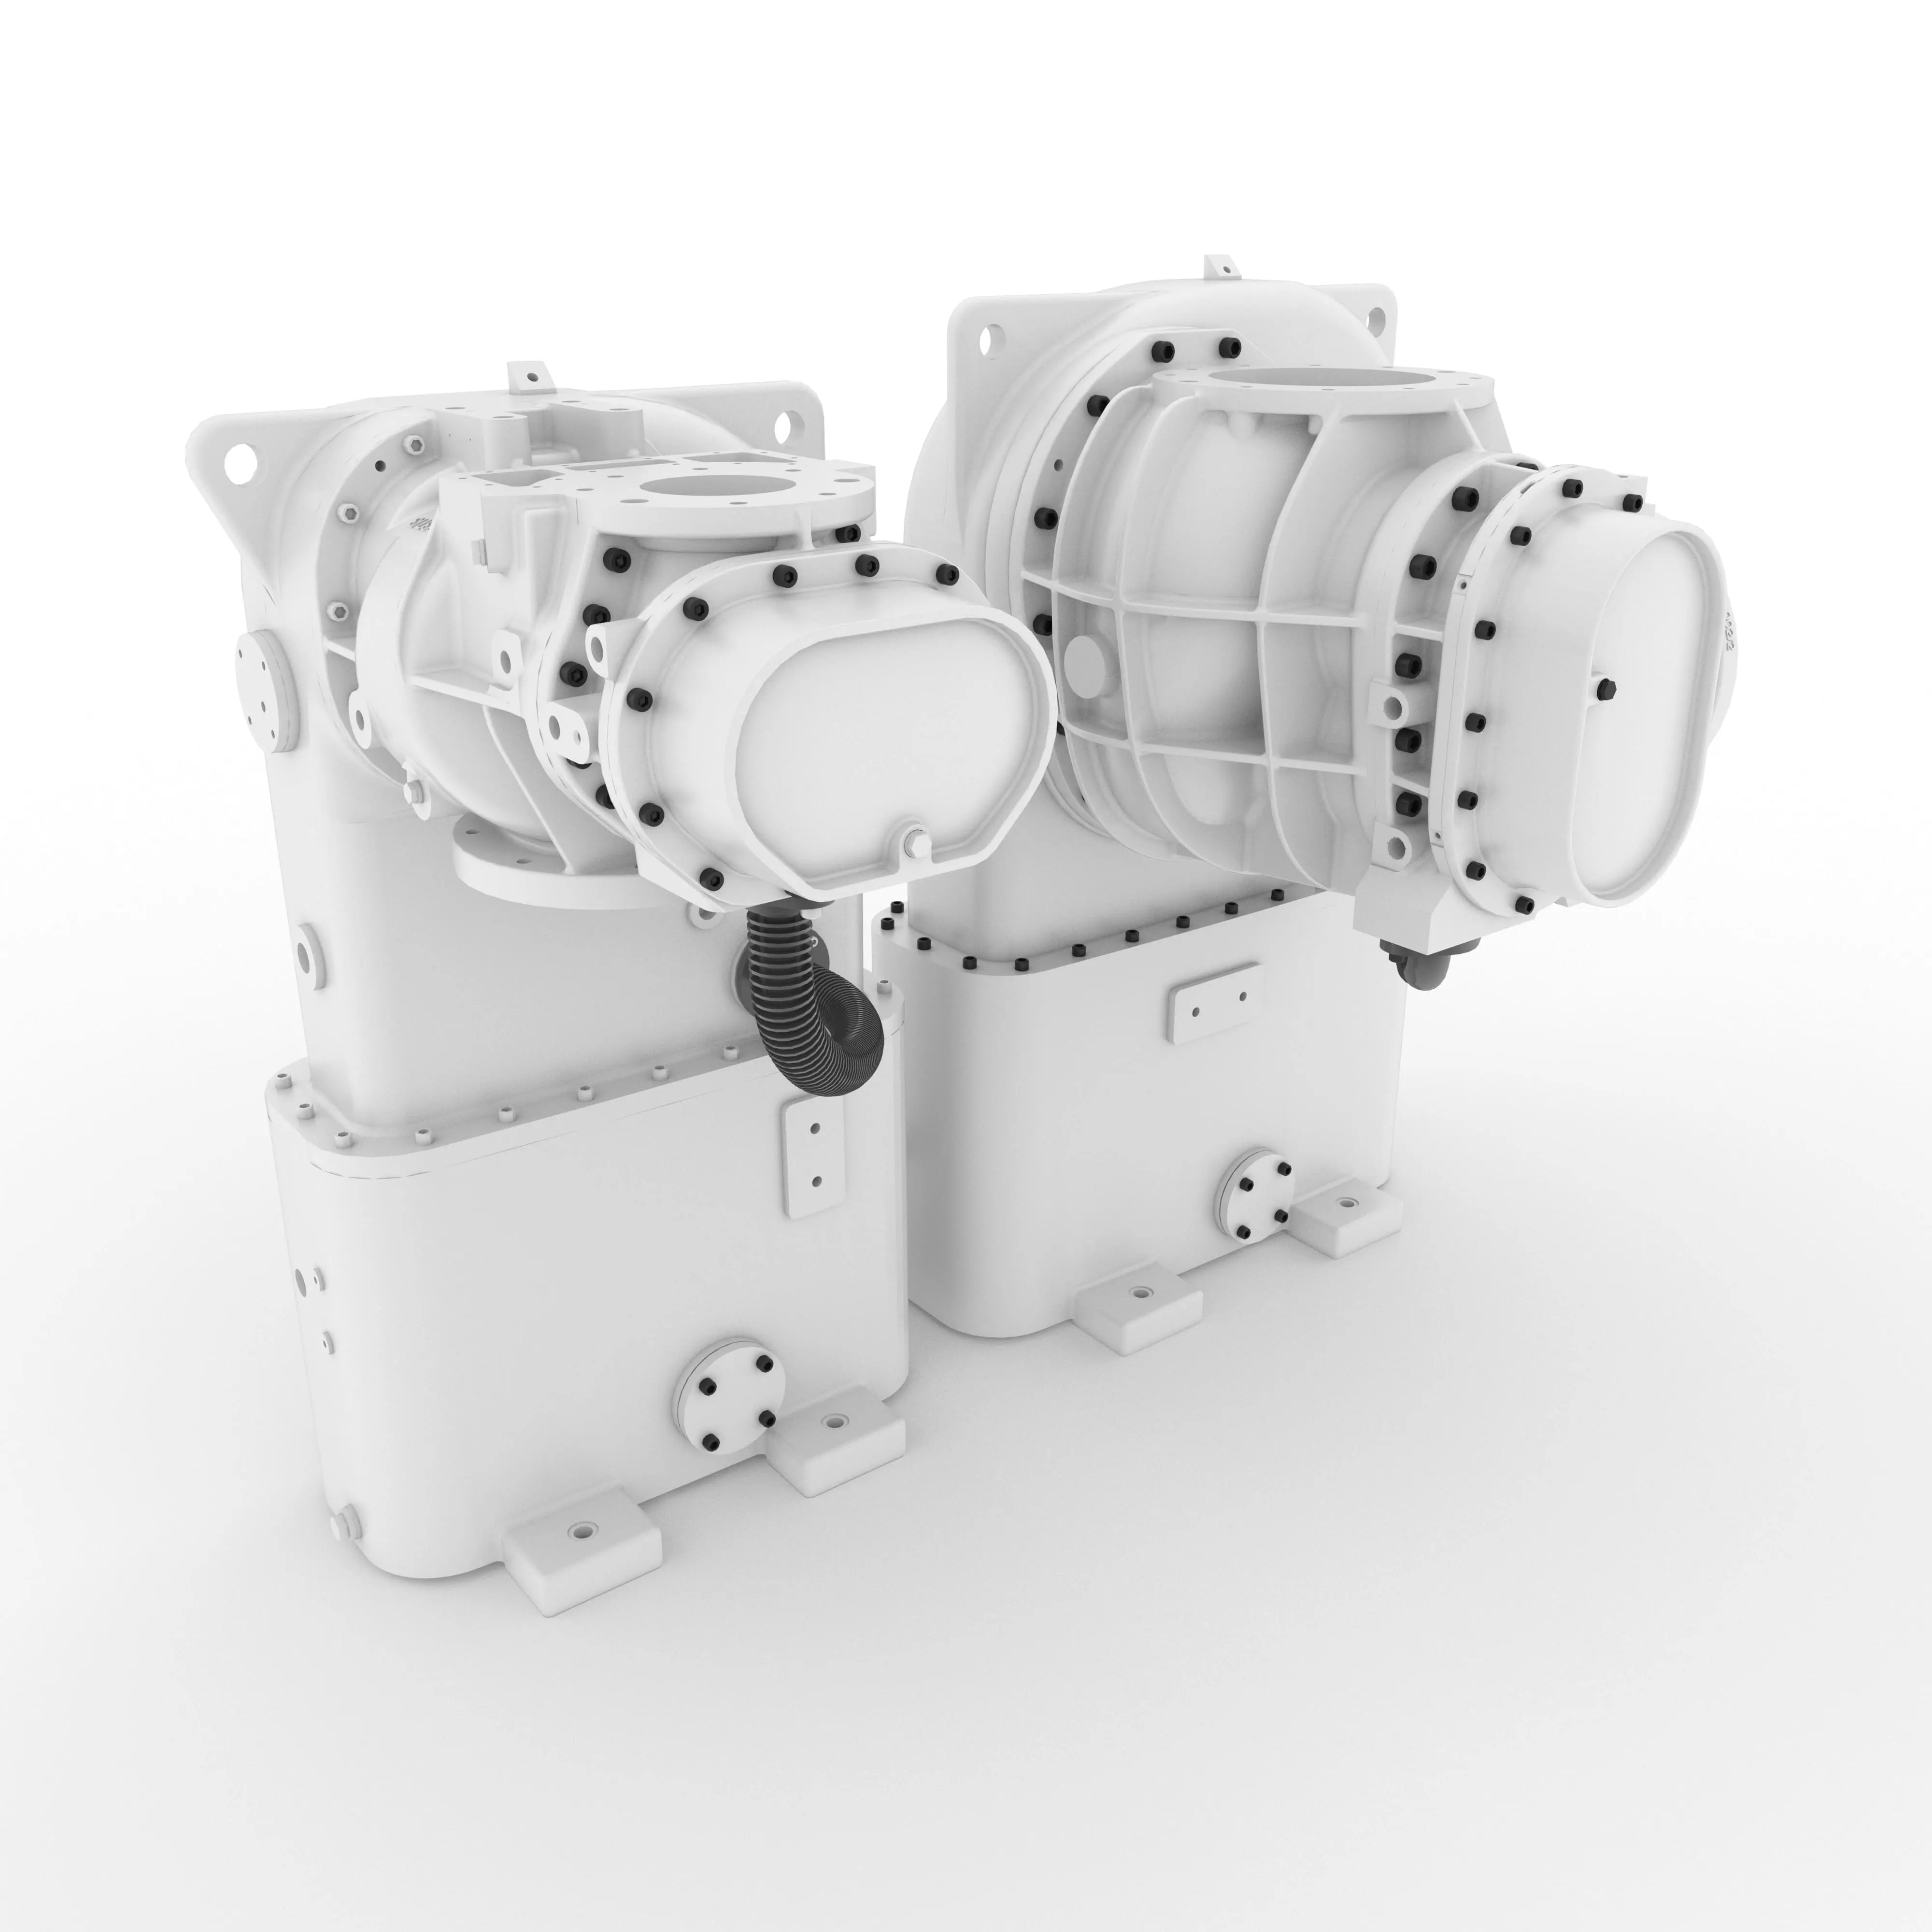 Ingersoll Rand Olievrije Schroef Luchtcompressoren E355-500 Kw Beste Prijs Luchtcompressor Machine